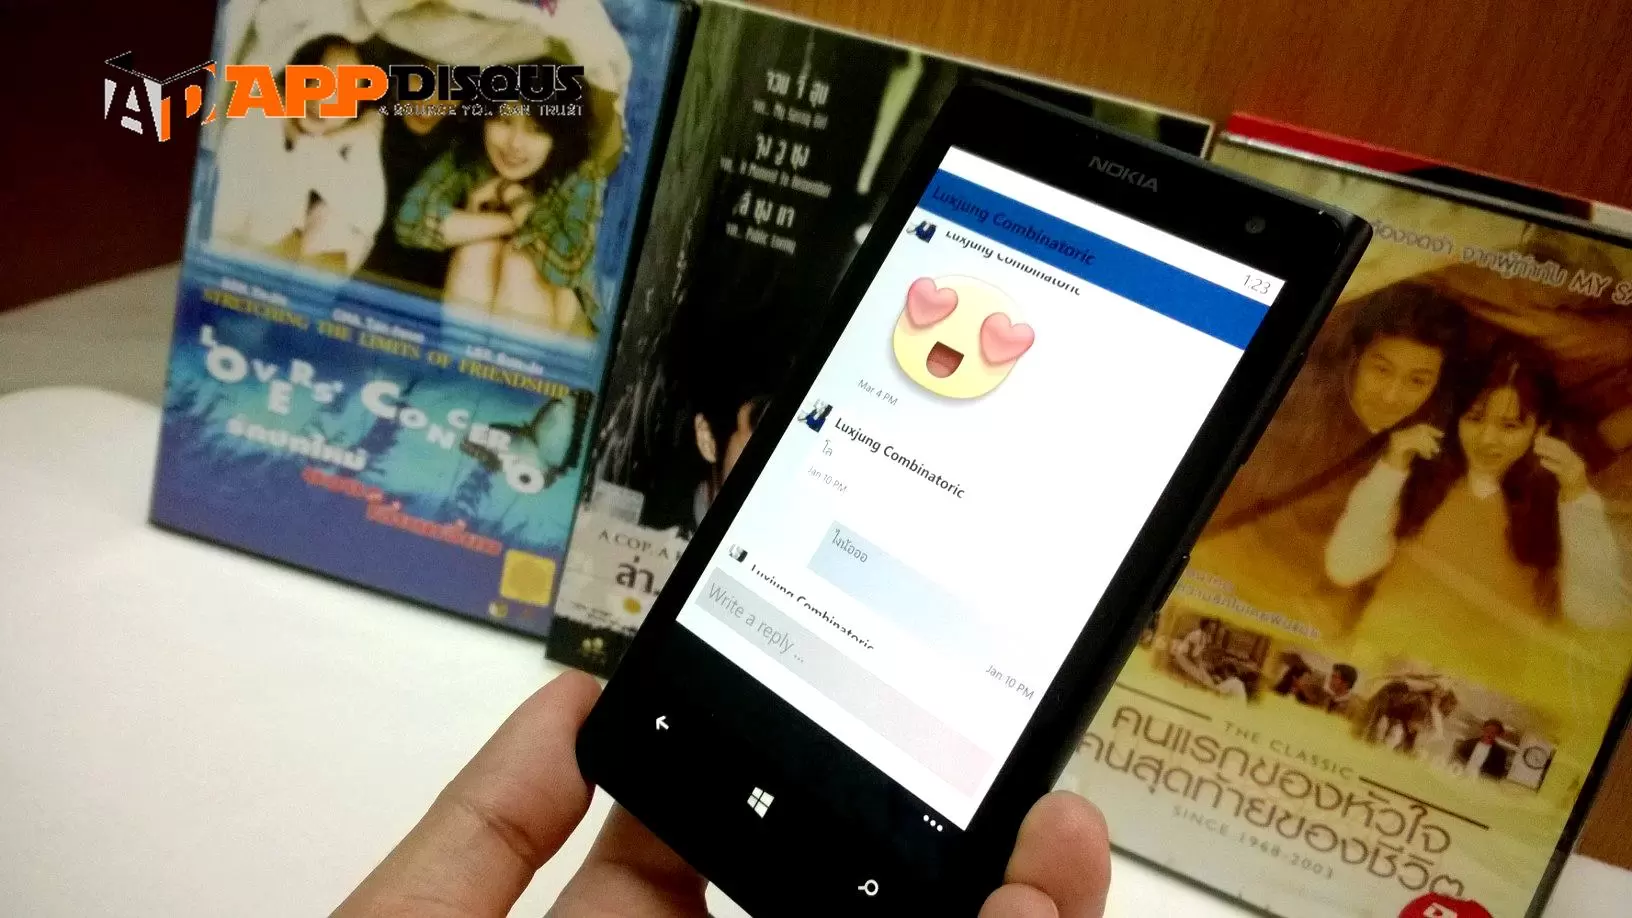 WP 20130918 13 26 07 Pro | Messenger HD | <!--:TH--></noscript>Facebook บน Windows Phone รับและส่งสติ๊กเกอร์ได้แล้ว!!? ด้วยแอพ Messenger HD ดาวน์โหลดไปสนุกกัน